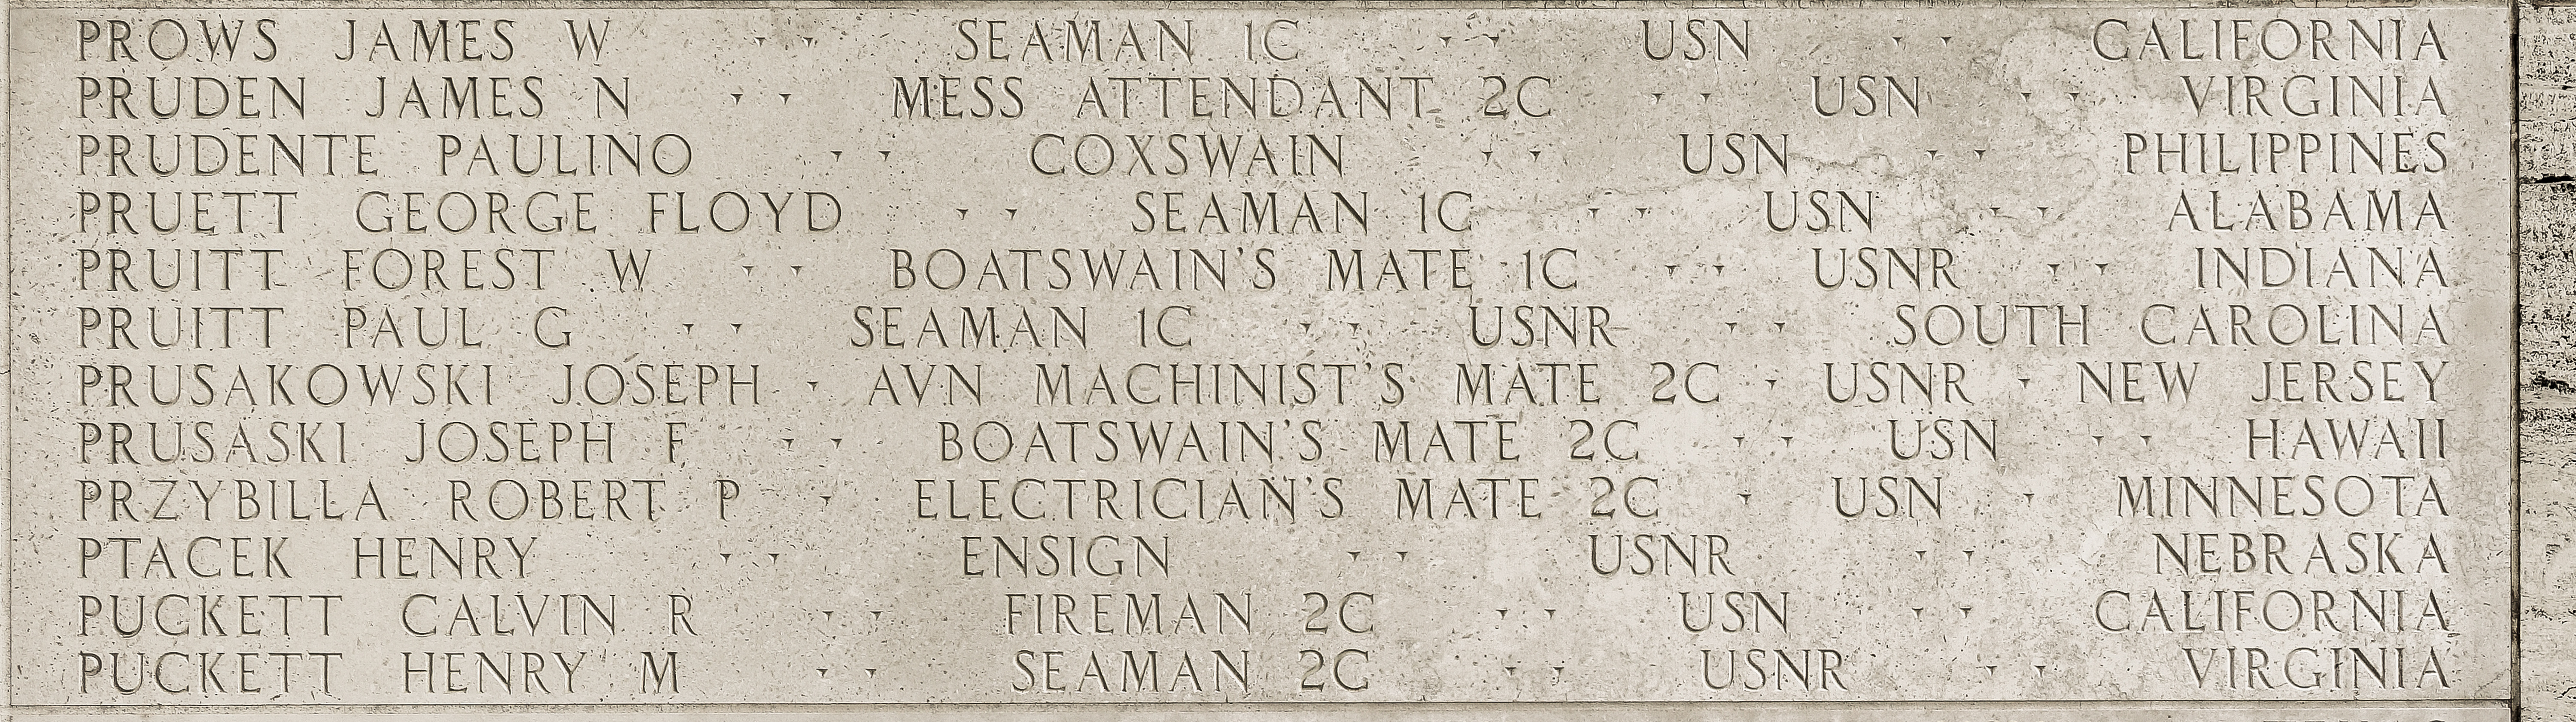 Joseph F. Prusaski, Boatswain's Mate Second Class